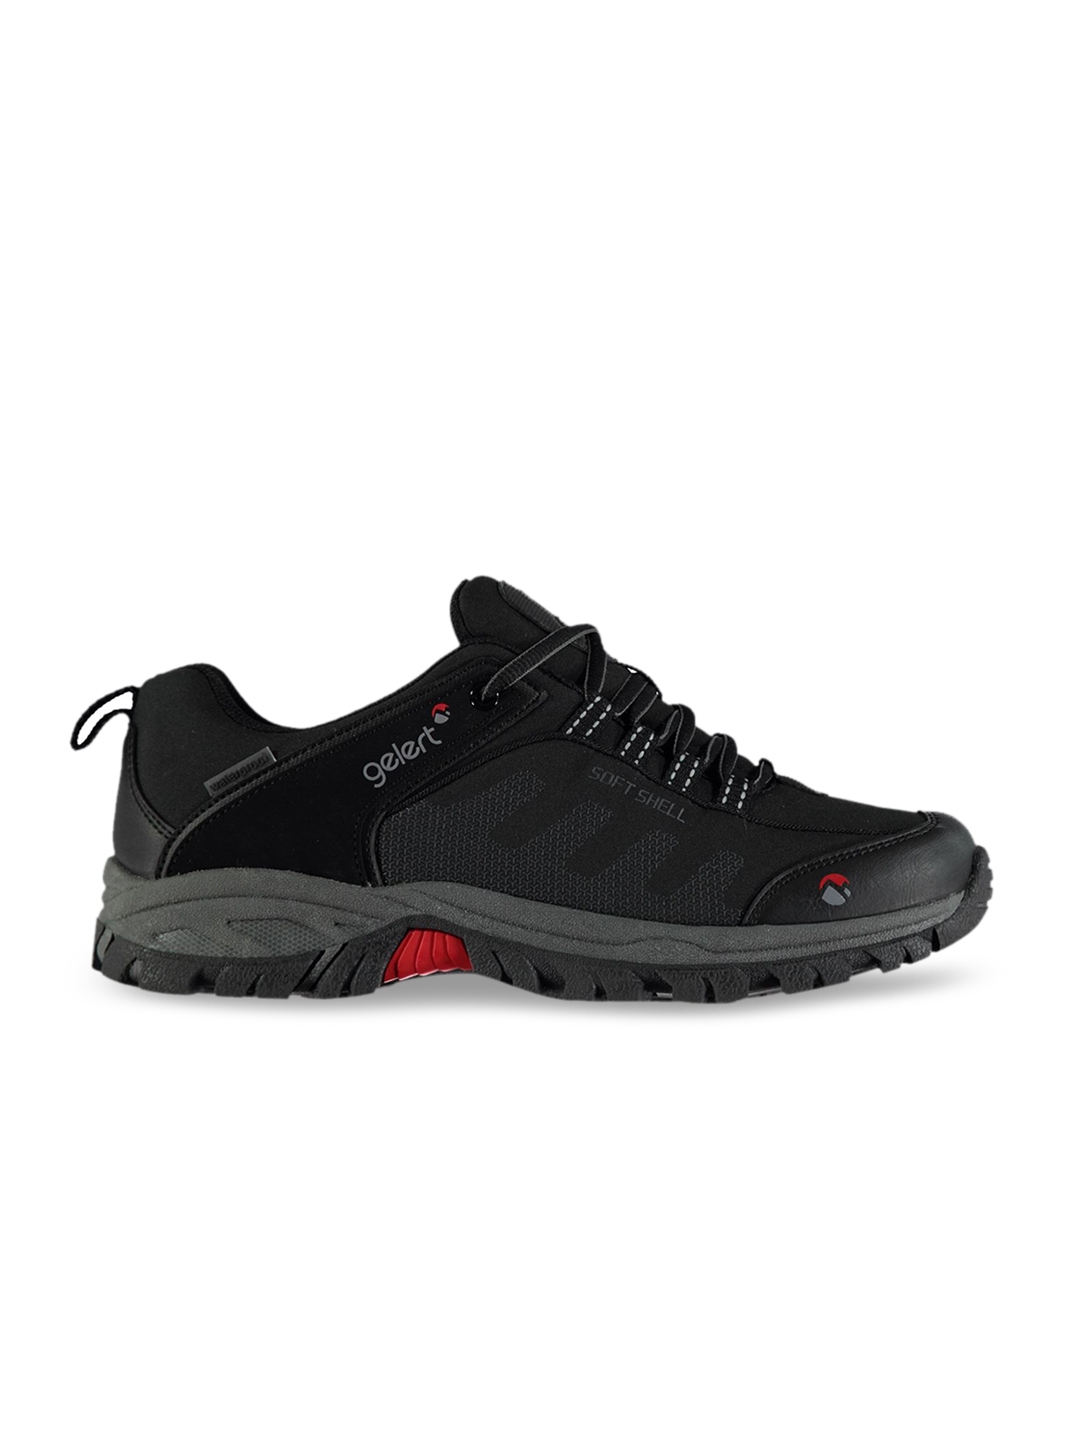 Buy Gelert Men Black Flat Boots - Casual Shoes for Men 8053025 | Myntra